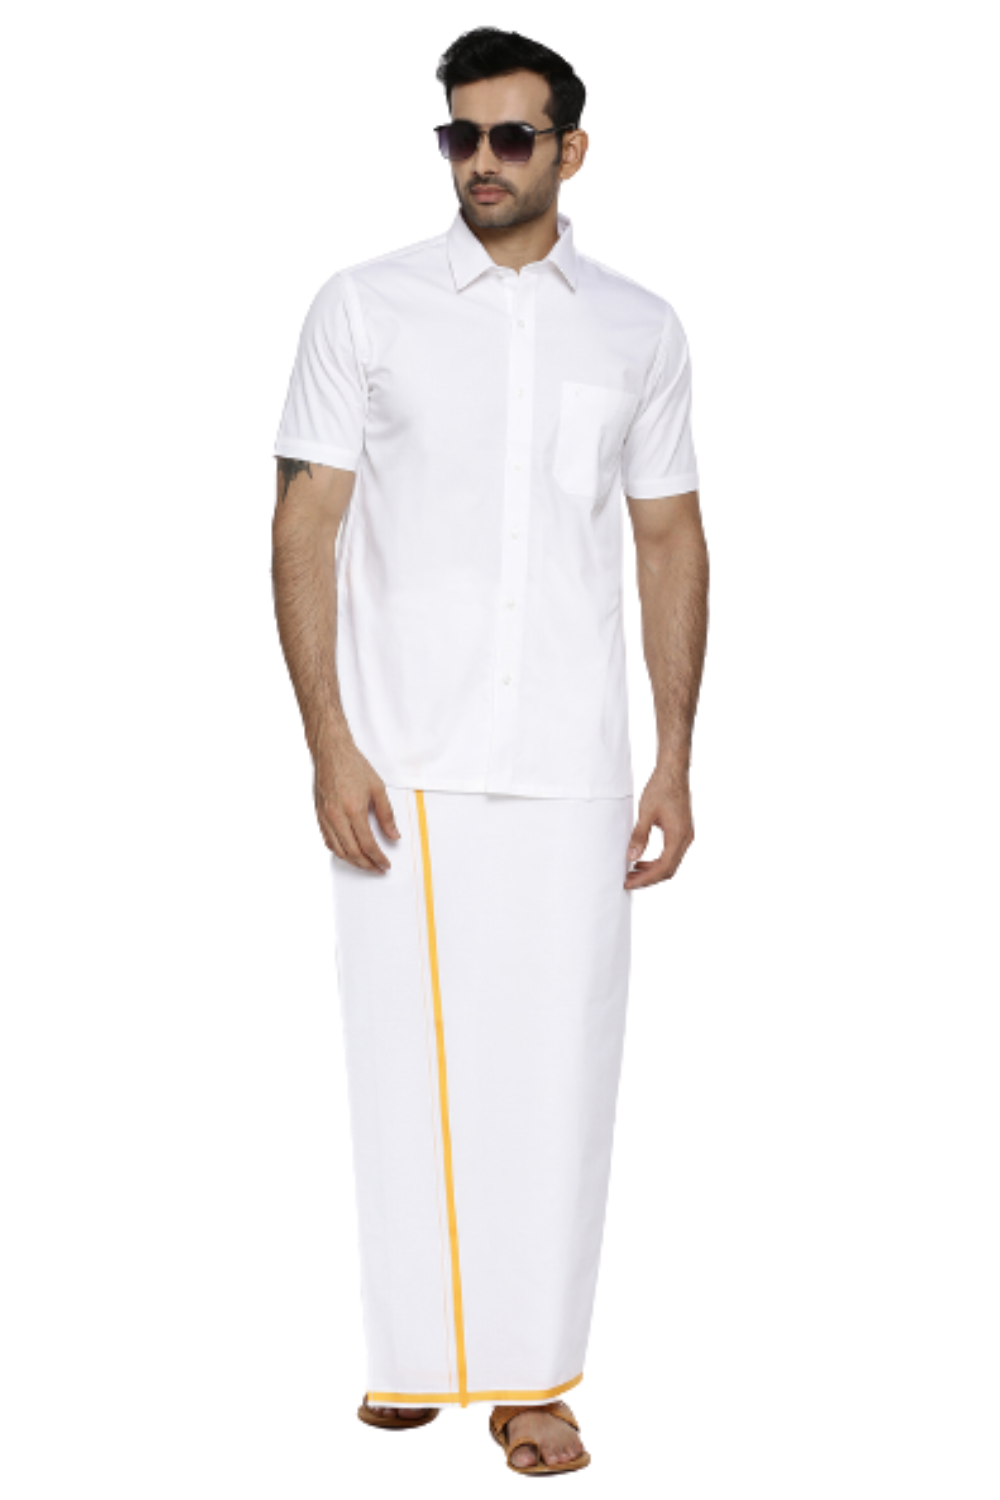 Mens 100% Cotton White Shirt Half Sleeves RR Image-Full view